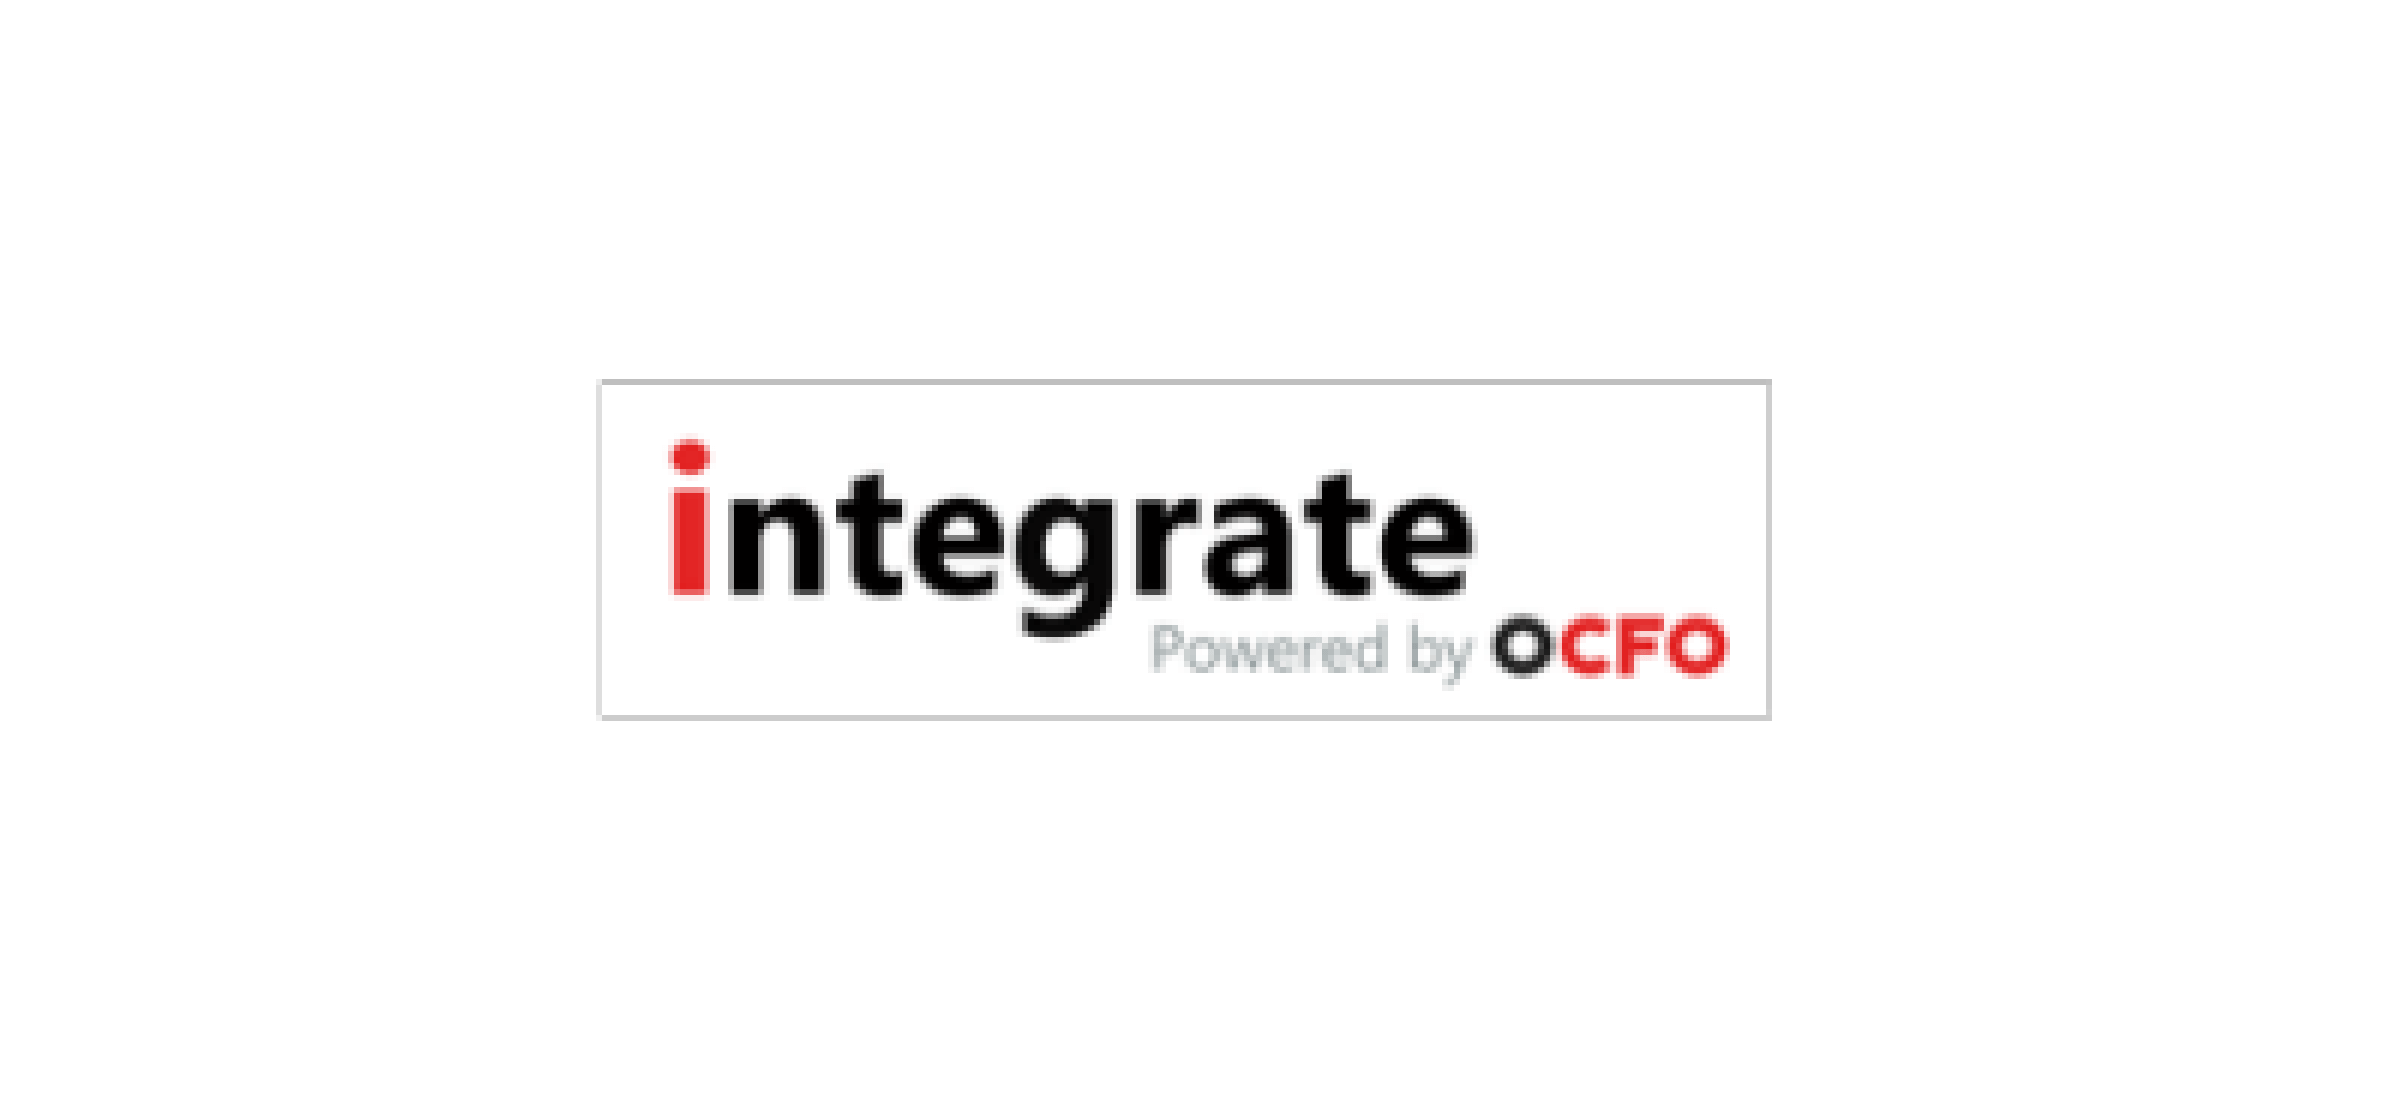 The Integrate logo